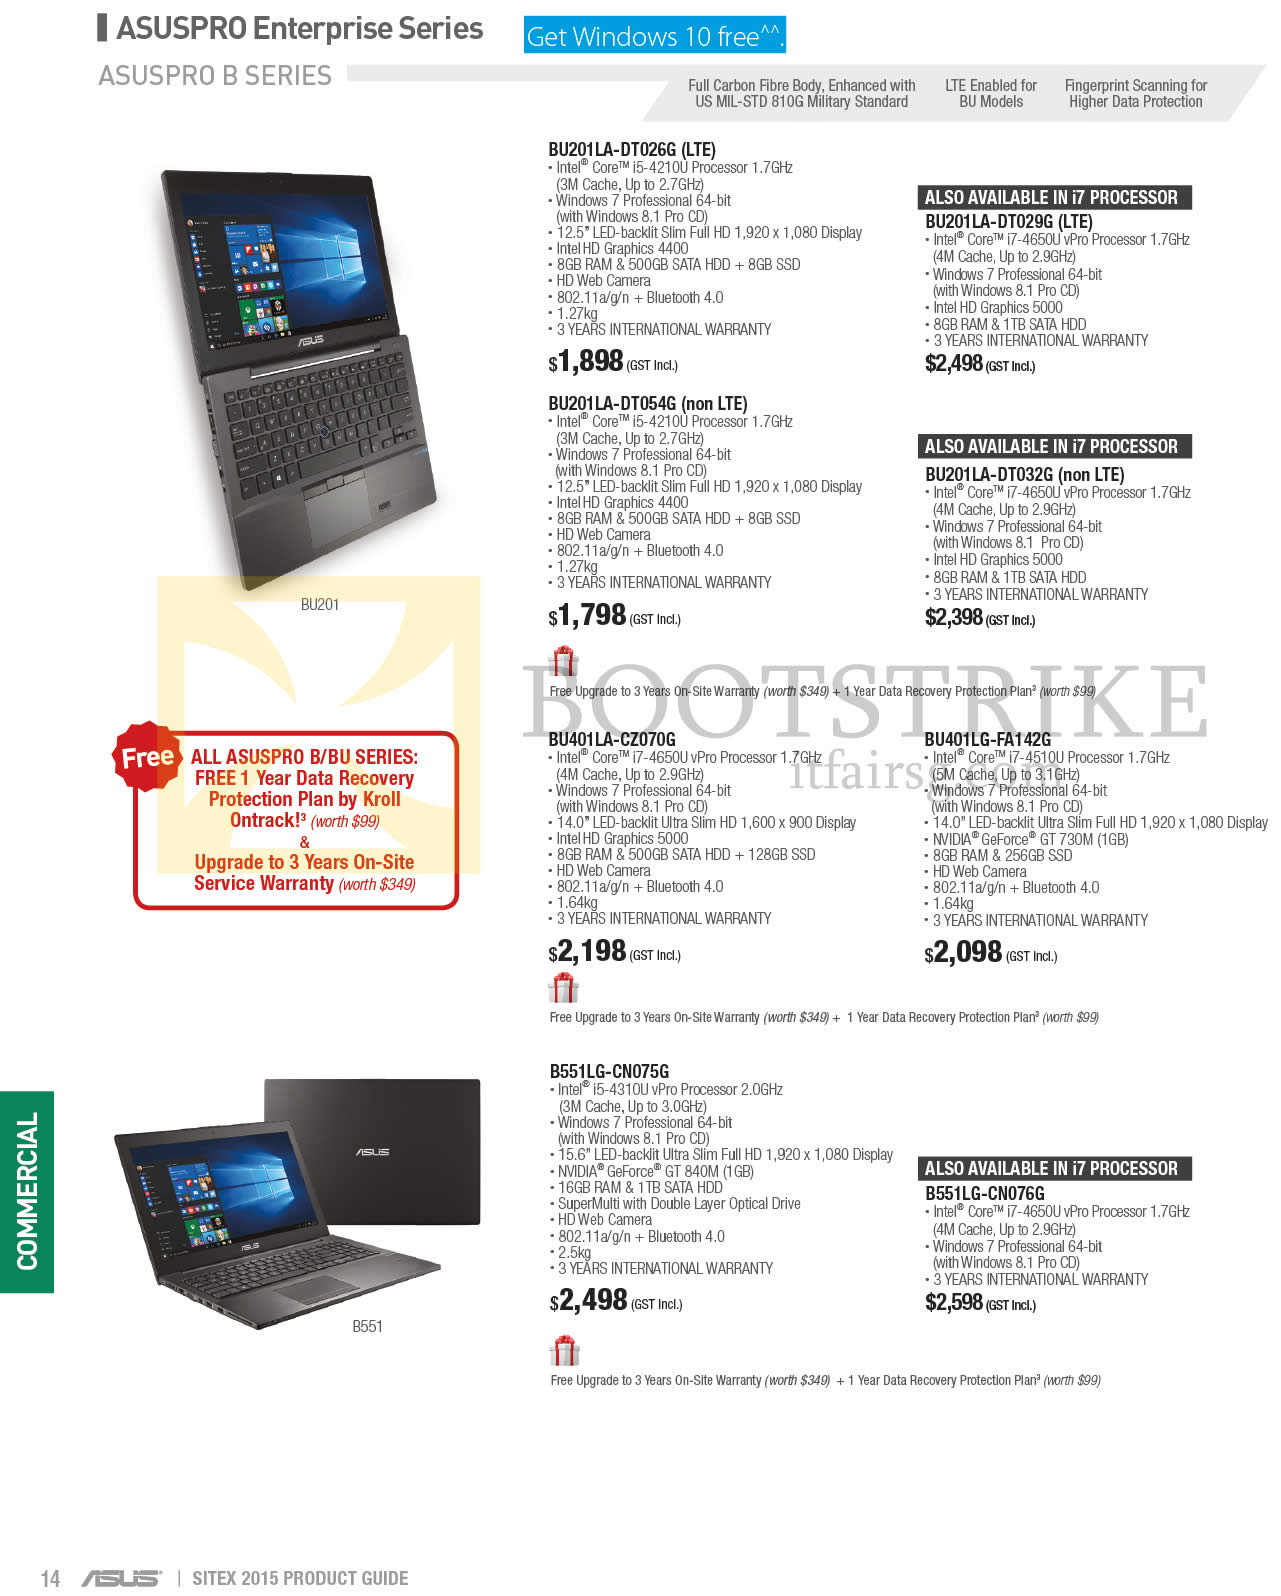 SITEX 2015 price list image brochure of ASUS Notebooks ASUSPro Enterprise B Series BU201LA-DT026G, BU201LA-DT054G, BU201LA-DT029G, BU201LA-DT032G, BU401LA-CZ070G, BU401LG-FA142G, B551LG-CN075G, B551LG-CN076G